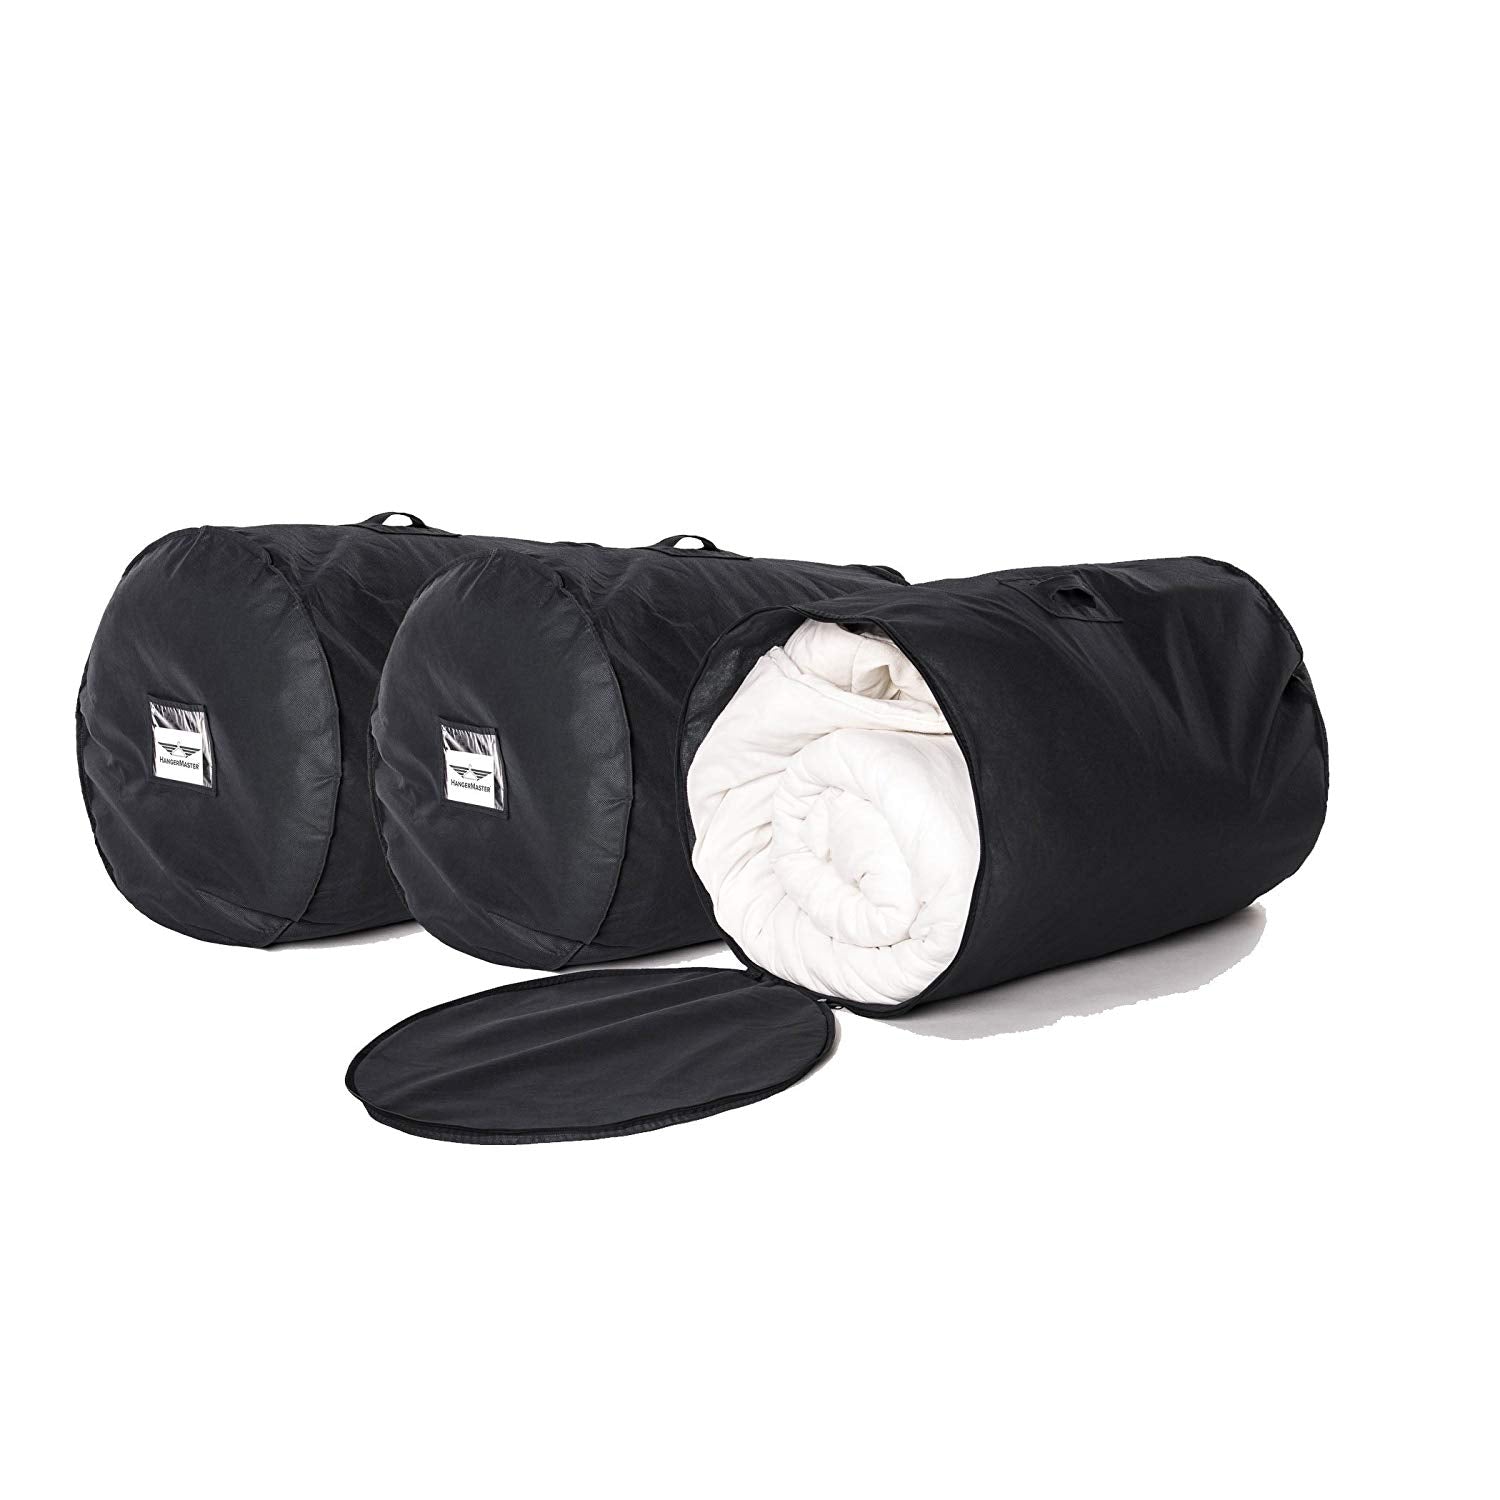 Hangermaster Breathable Duvet Storage Bag 3 Pack Camby Home